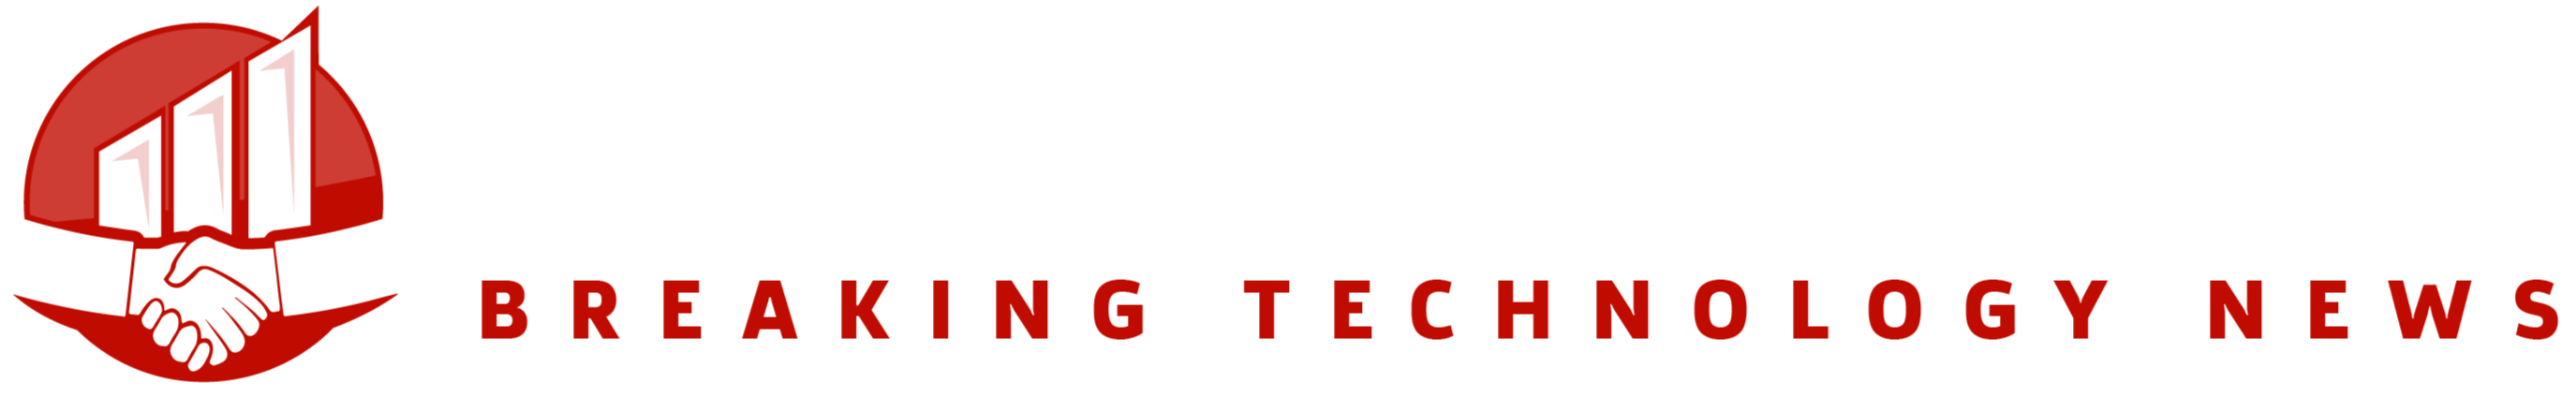 Tech Investor News